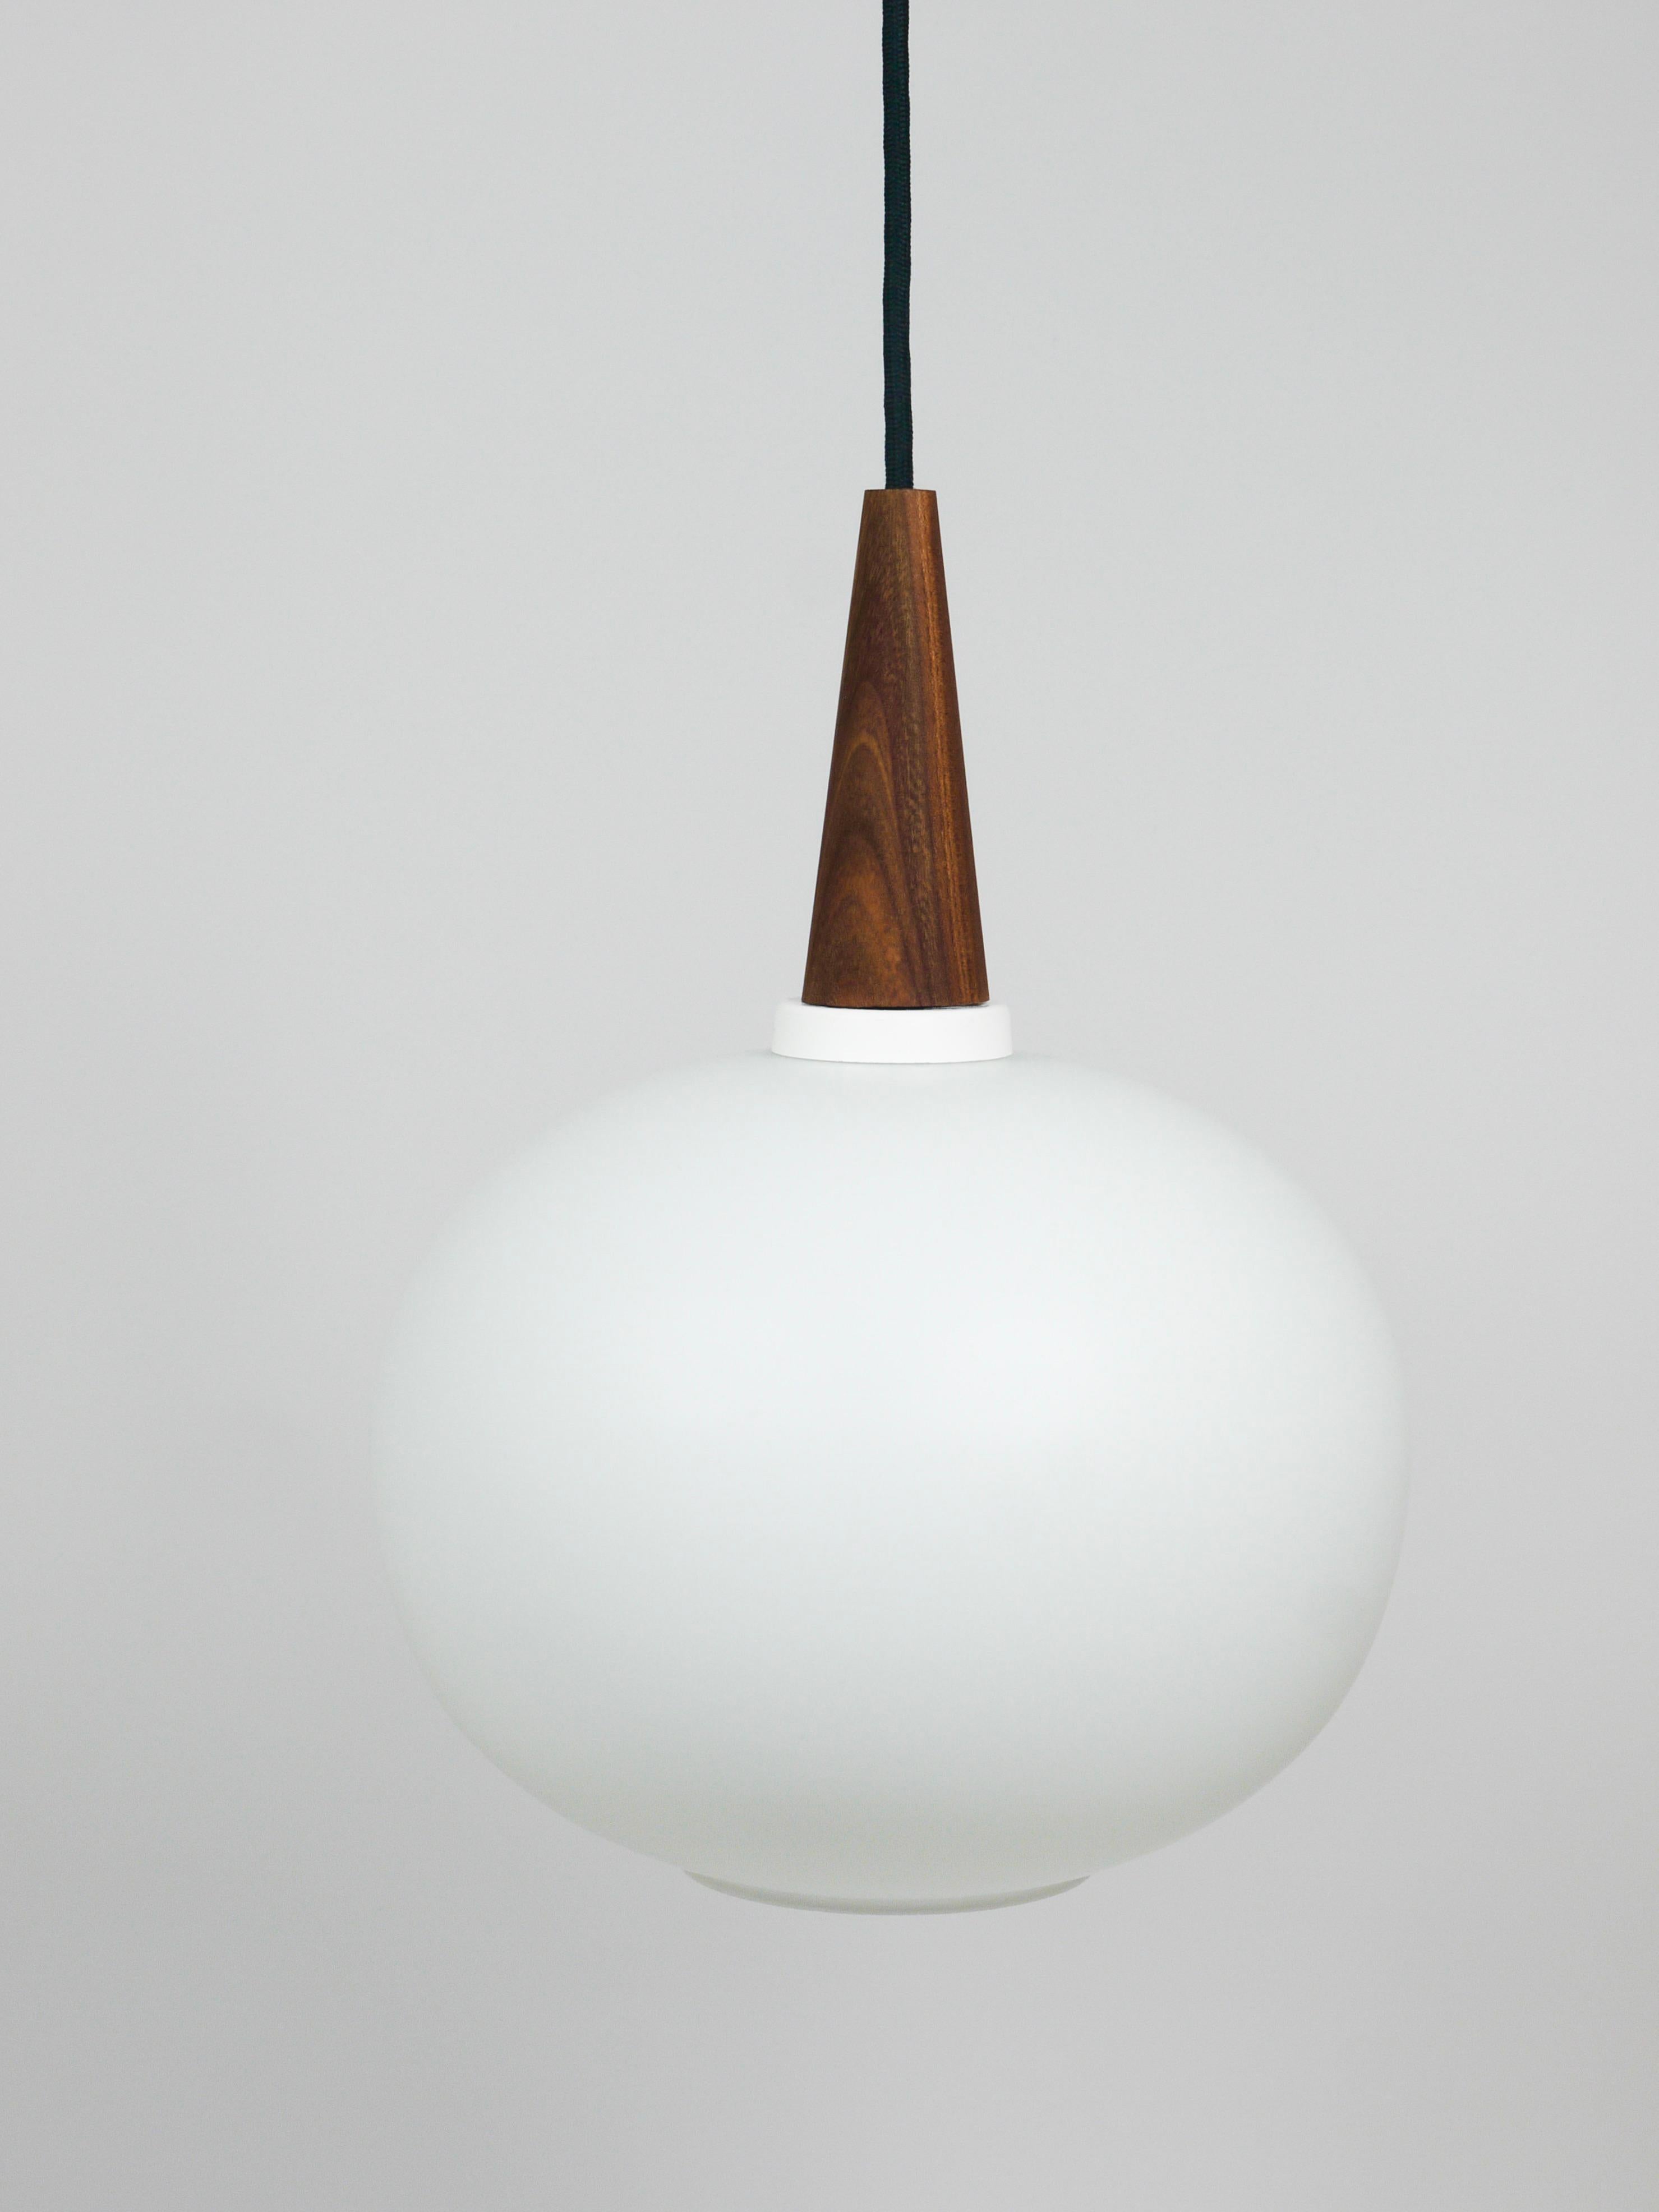 Louis Kalff Teak & Opaline Pendant Suspension Lamp, Philips, Netherlands For Sale 3